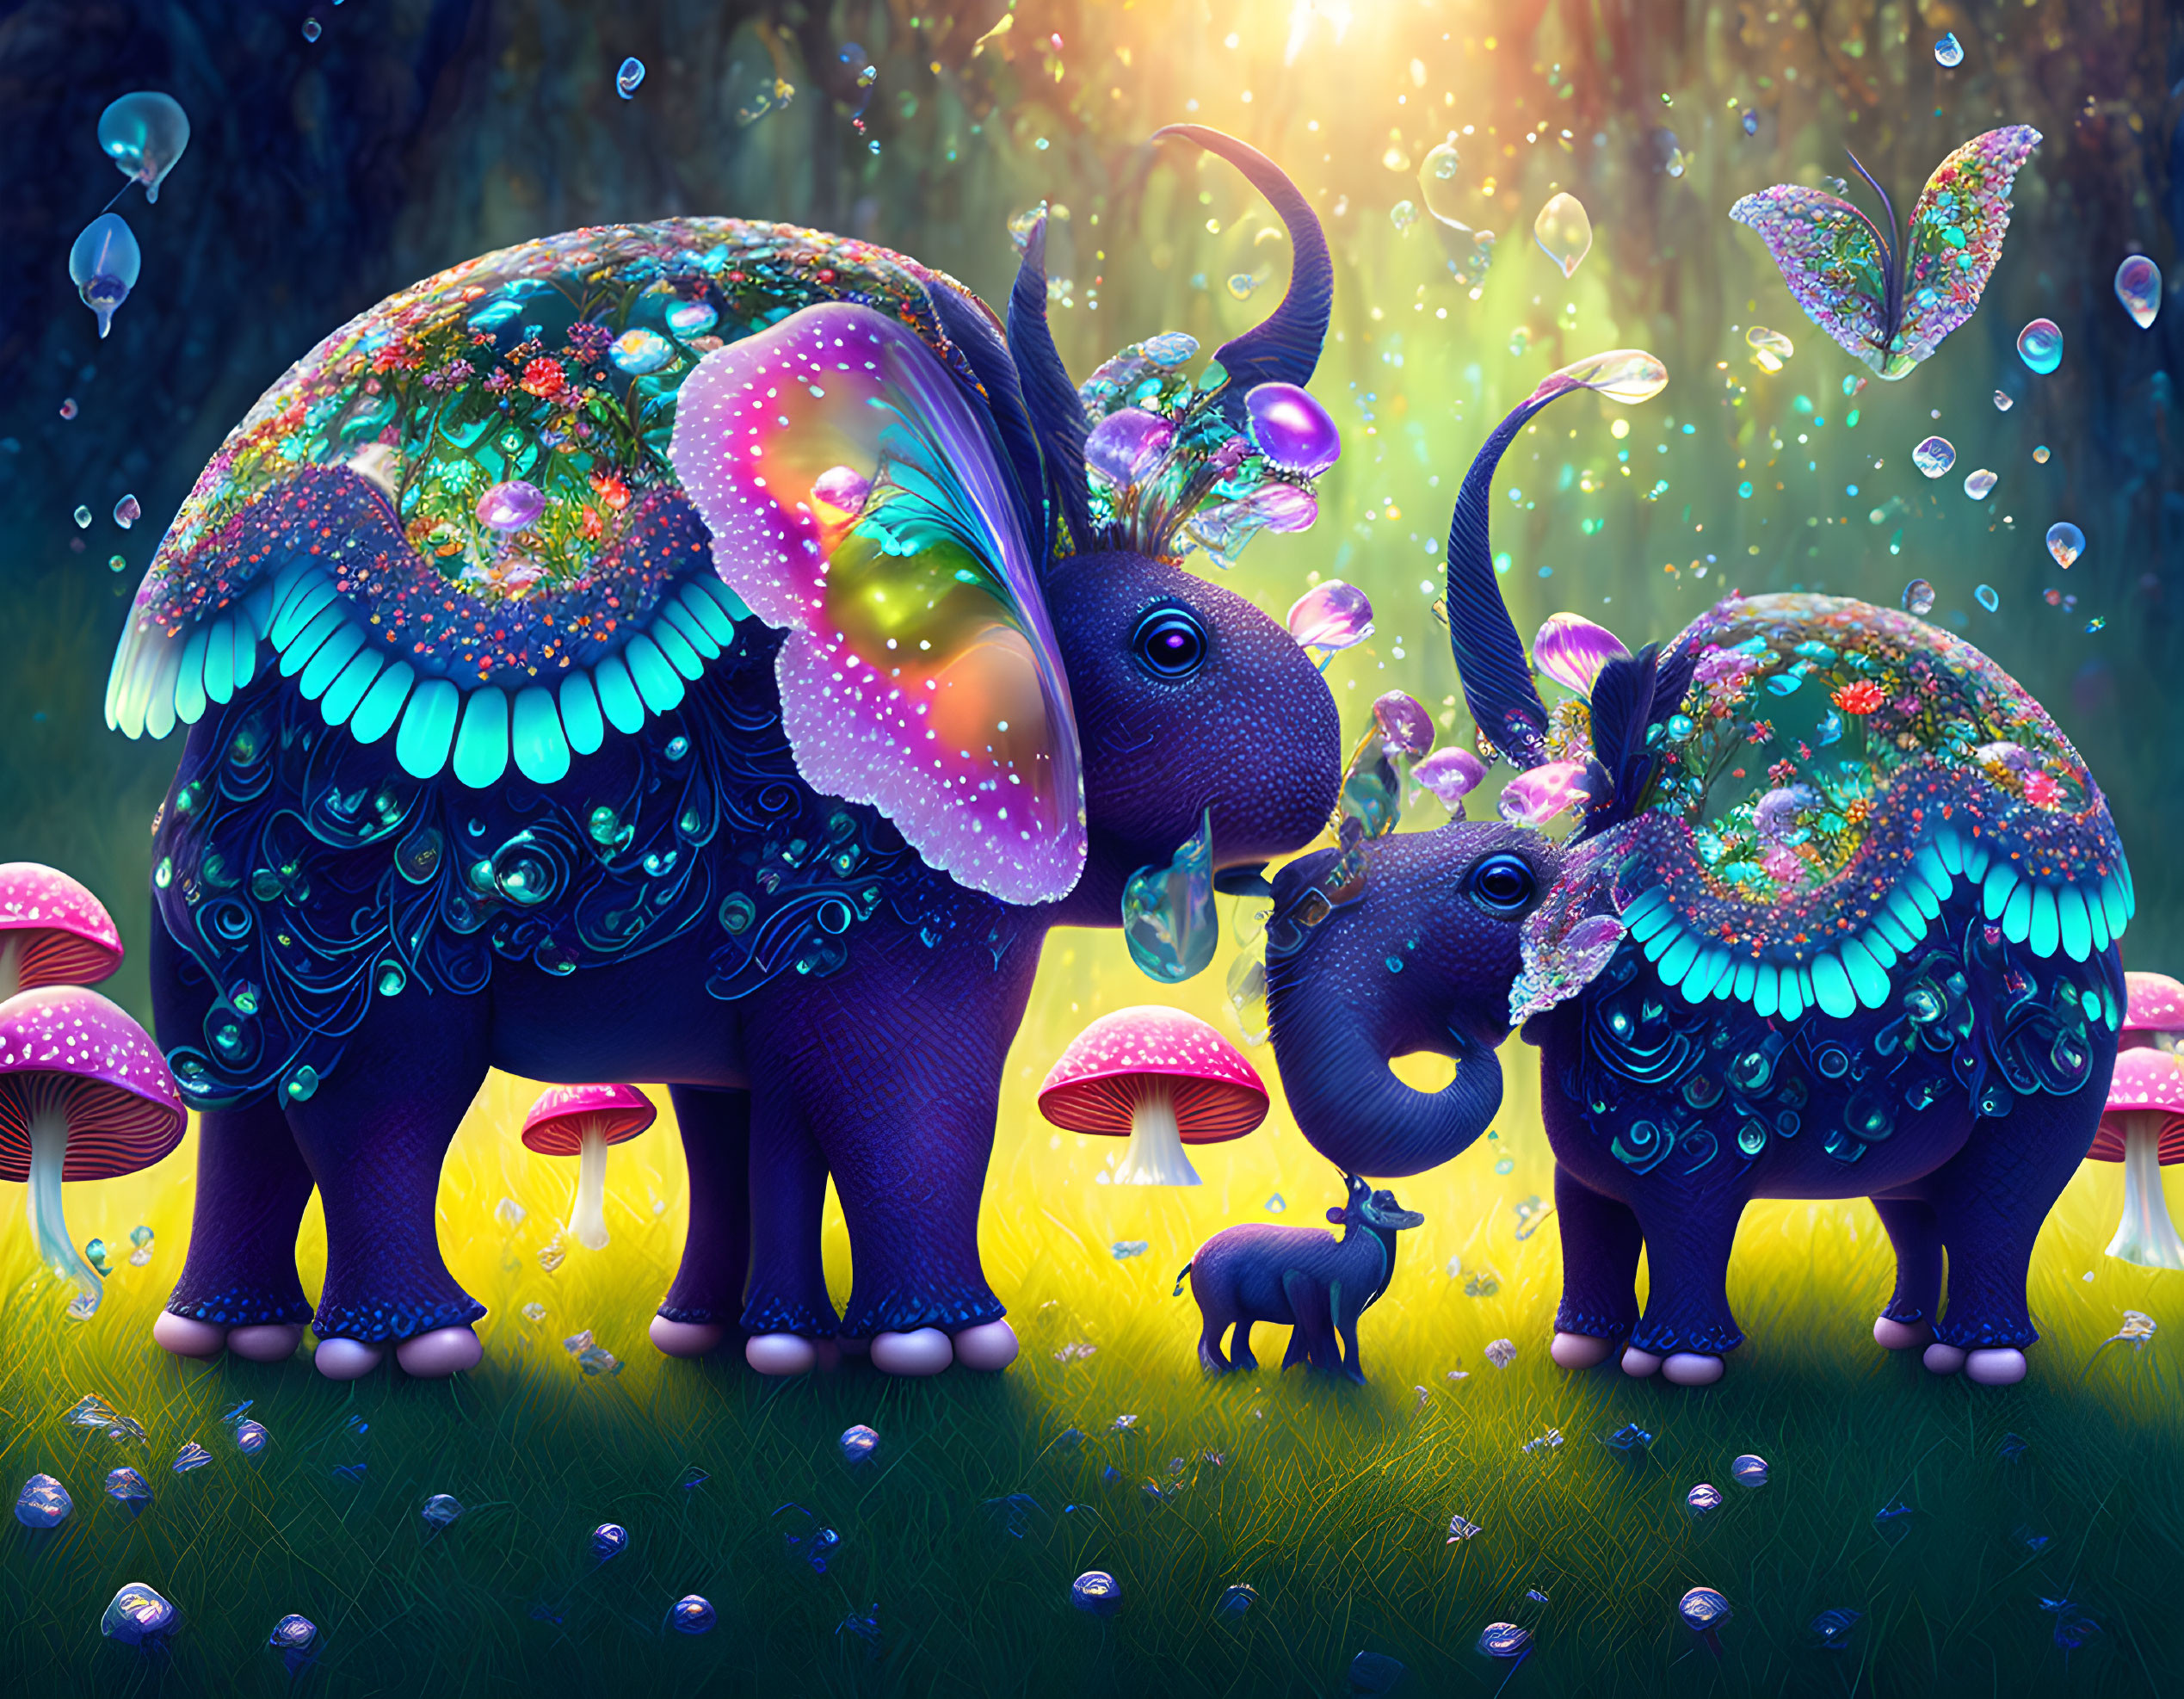 Fairyland with glass mushrooms 